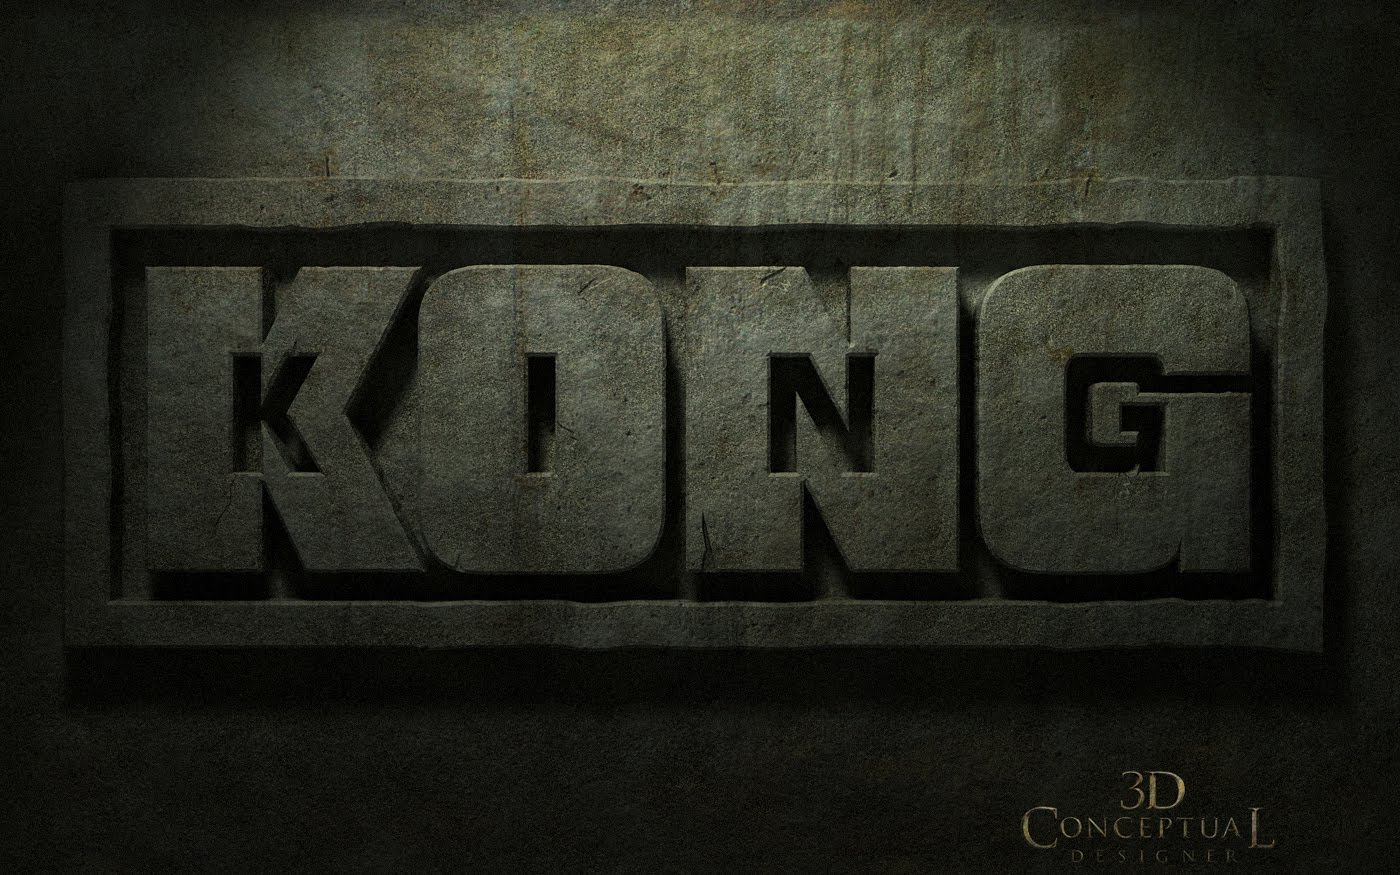 3DconceptualdesignerBlog: Project Review: King Kong 2005- 3D Logo Designs PART I